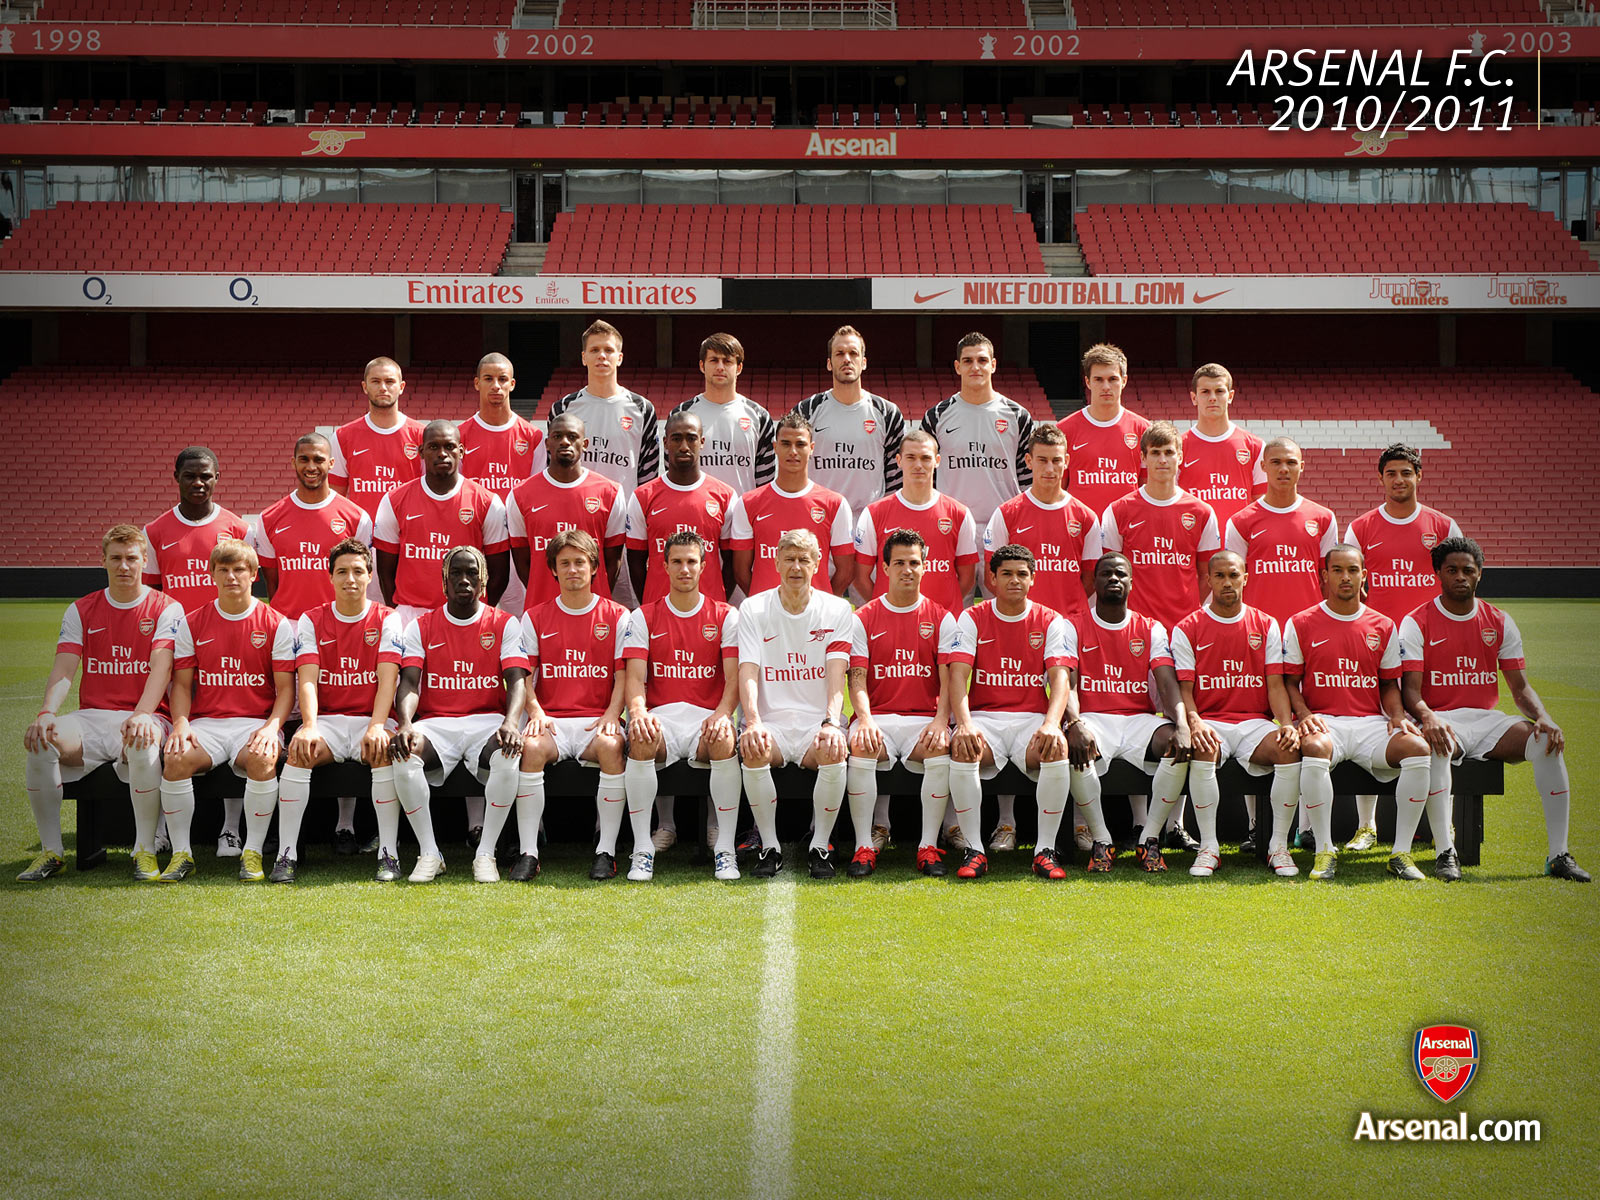 EPL wallpaper: Arsenal 2010/2011 team wallpaper